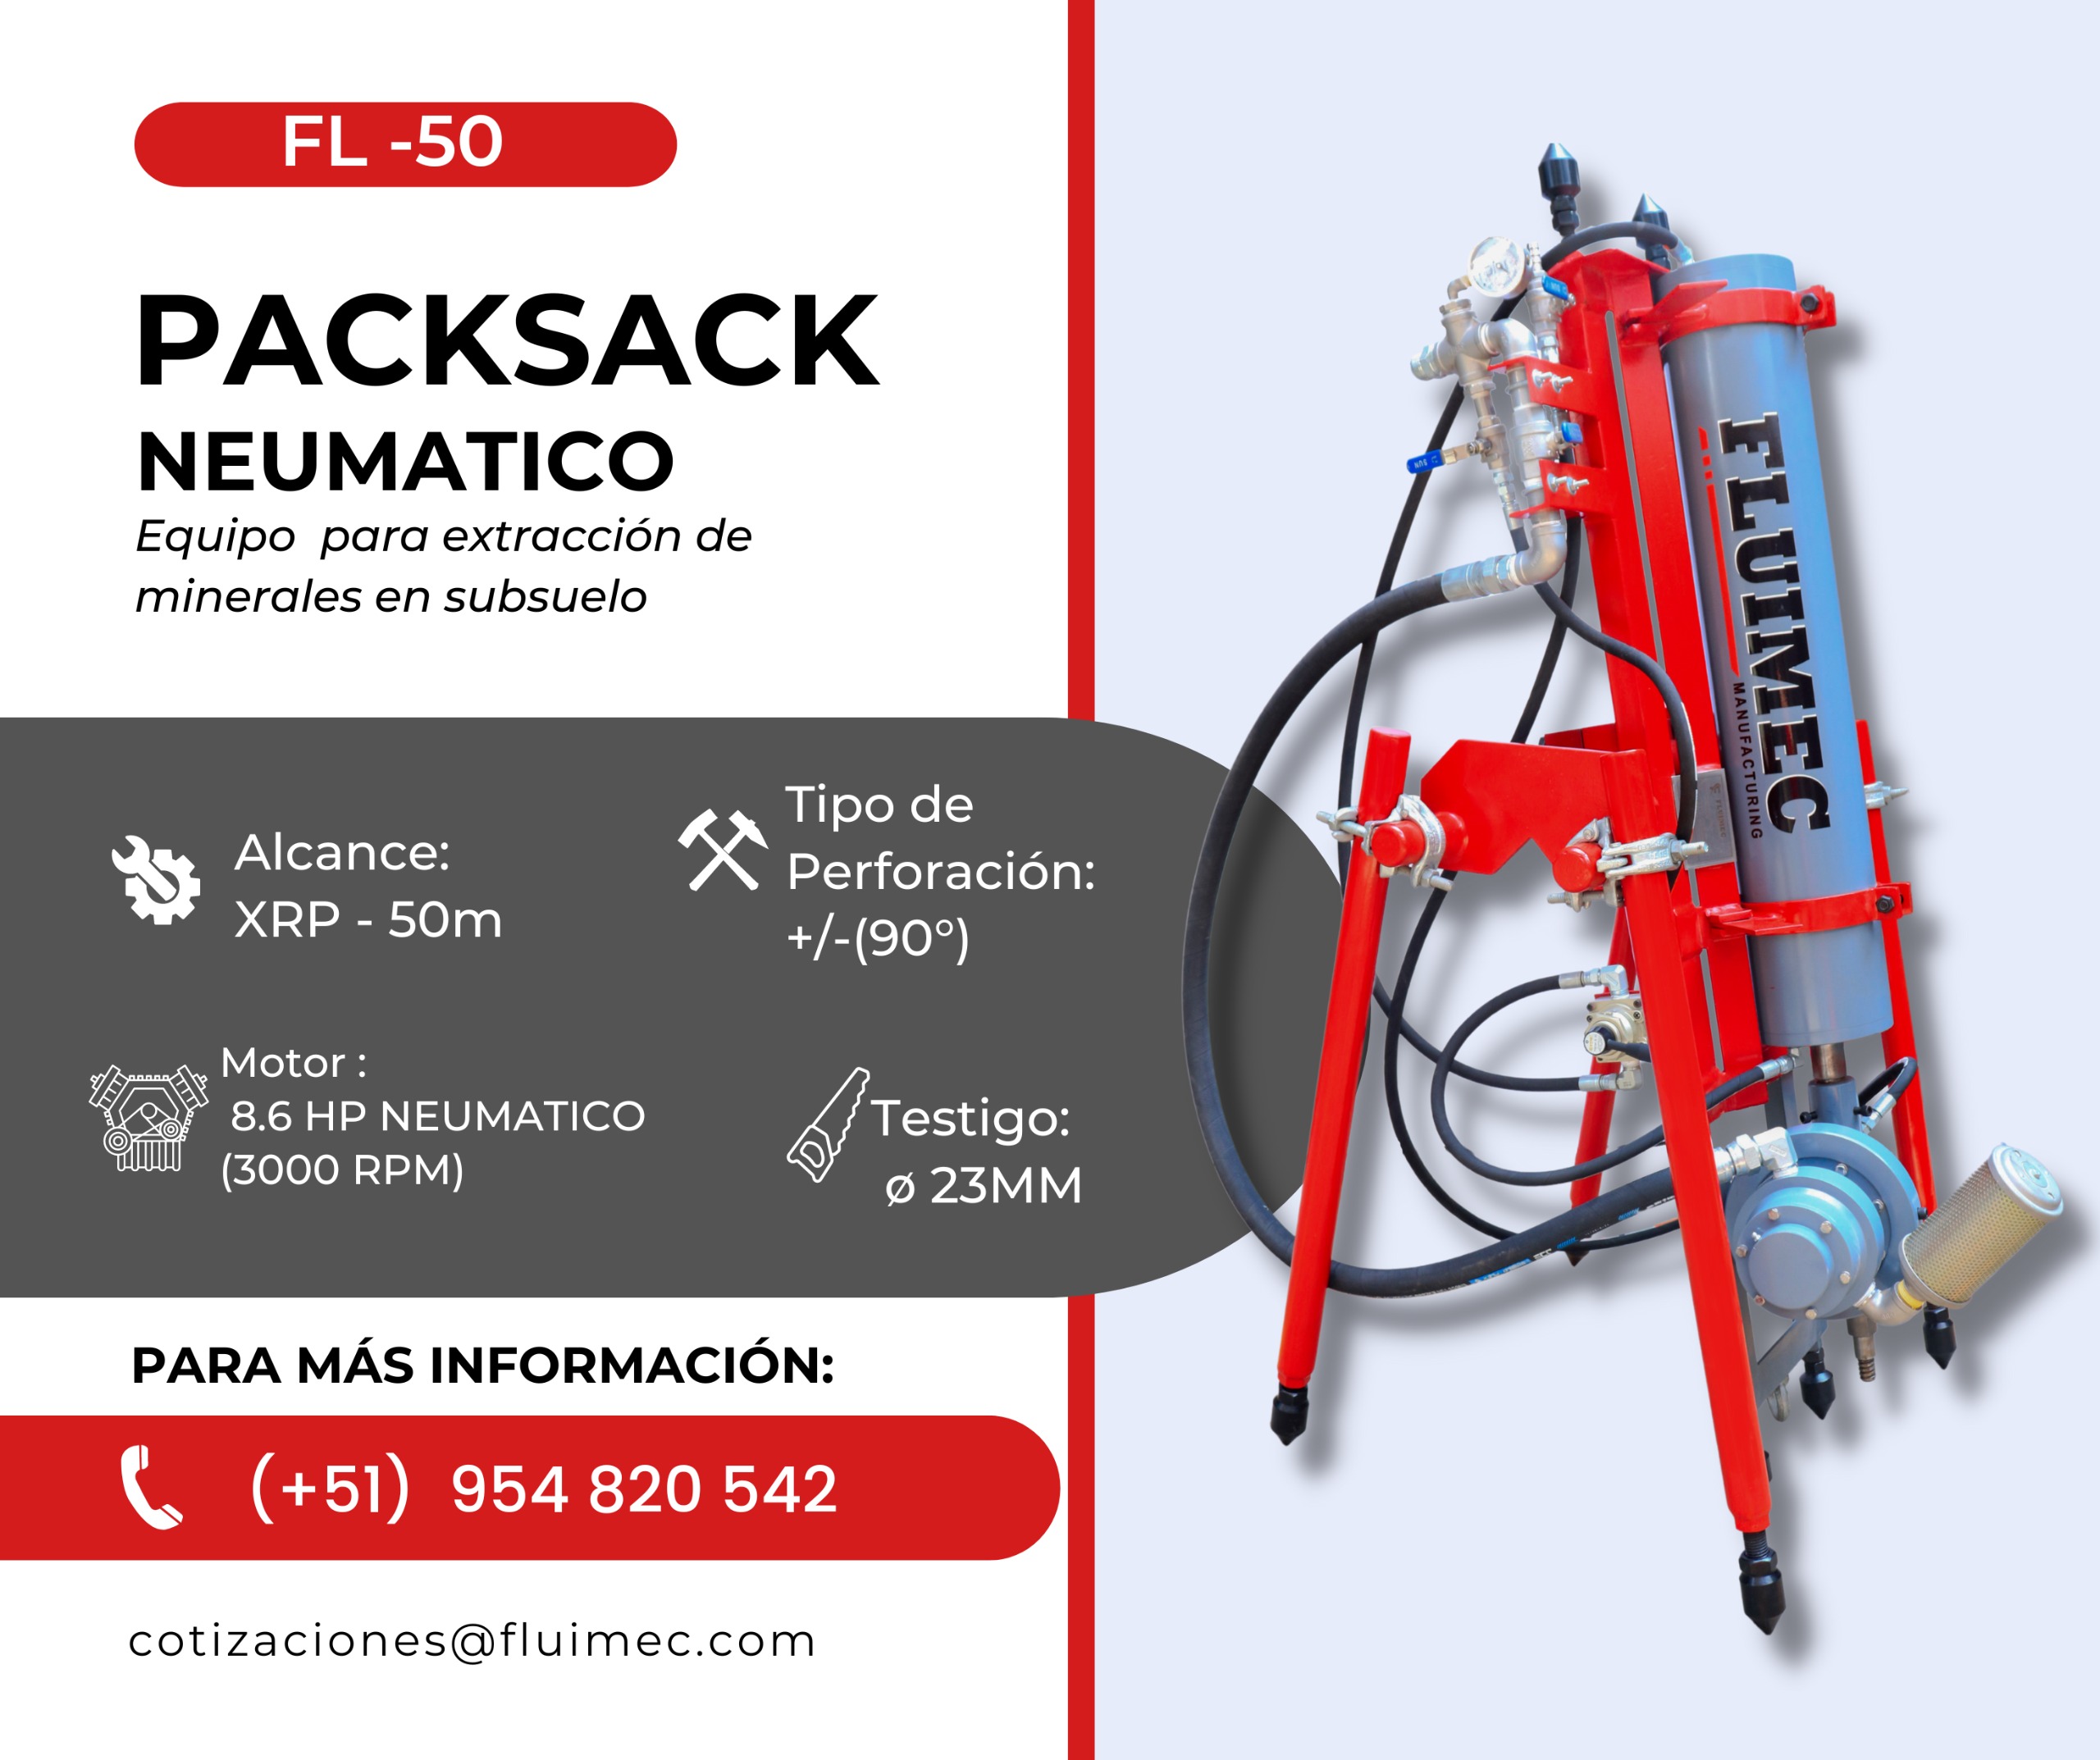 Packsack FL-50 - Muestreo exitoso